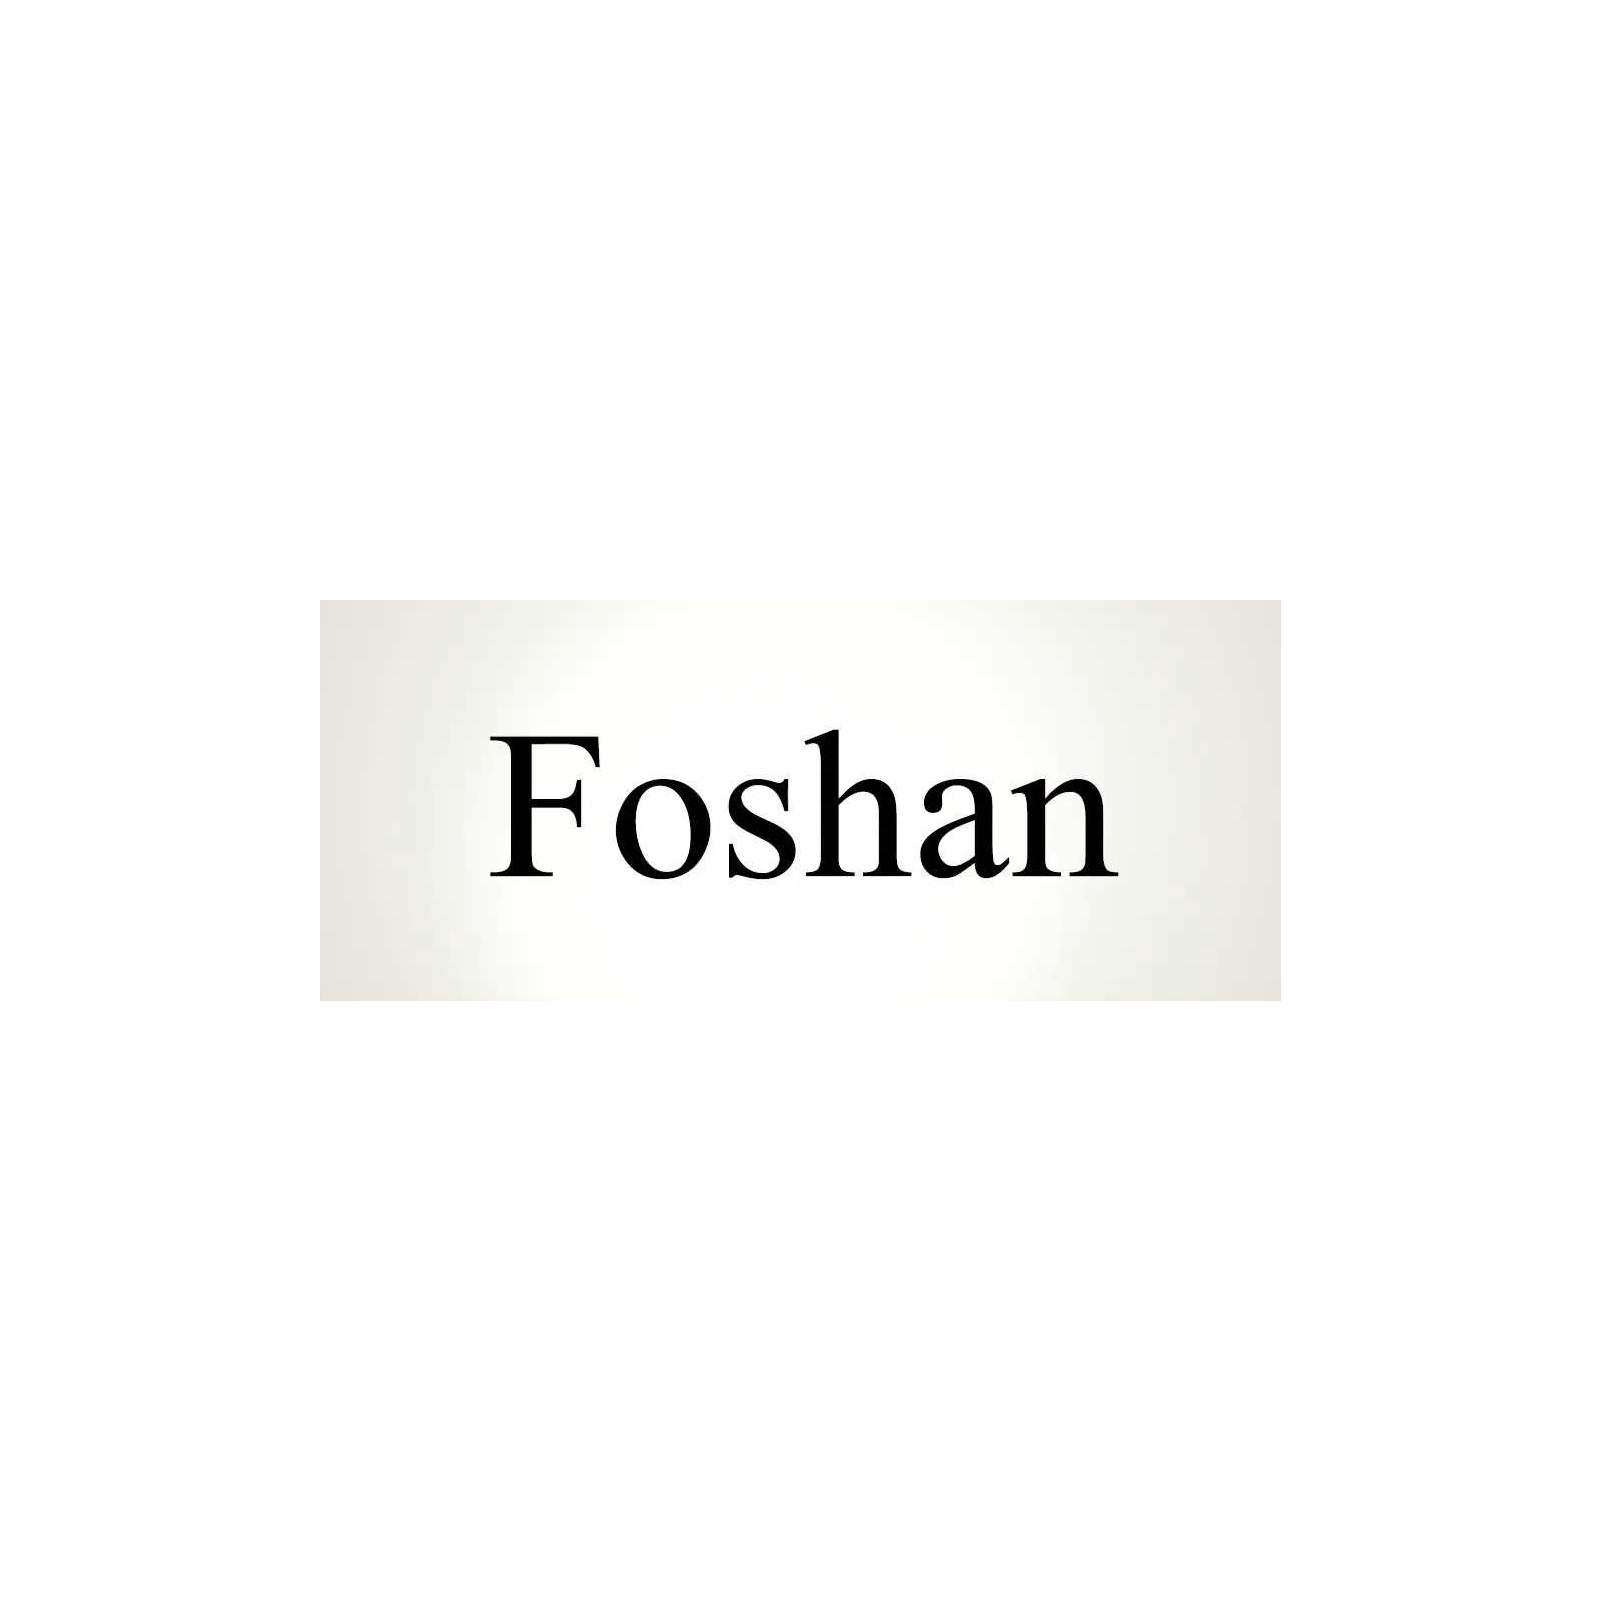 Вал Fuser Cleaning Roller Ricoh Aficio 2015 Foshan (AE04-2063-FYS)